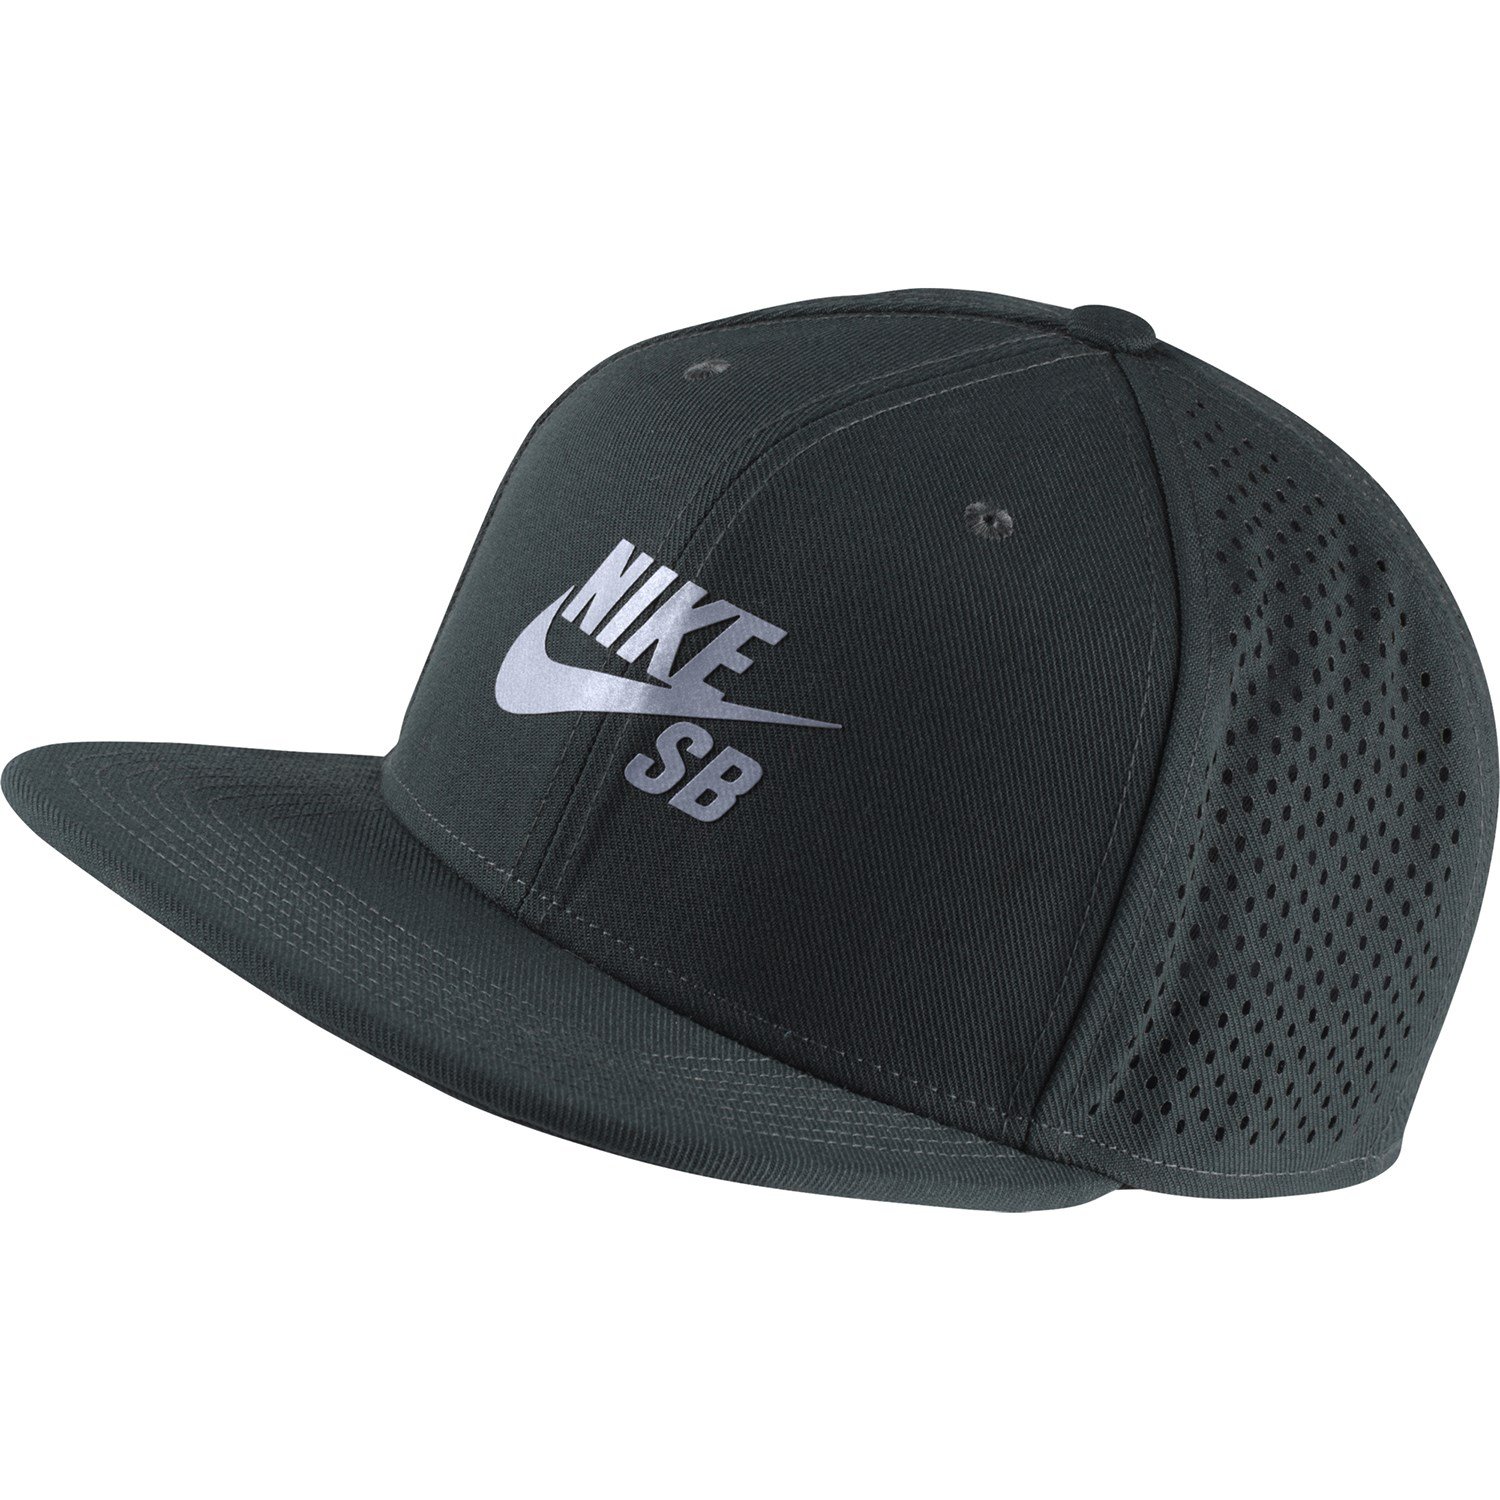 Nike SB Performance Hat | evo